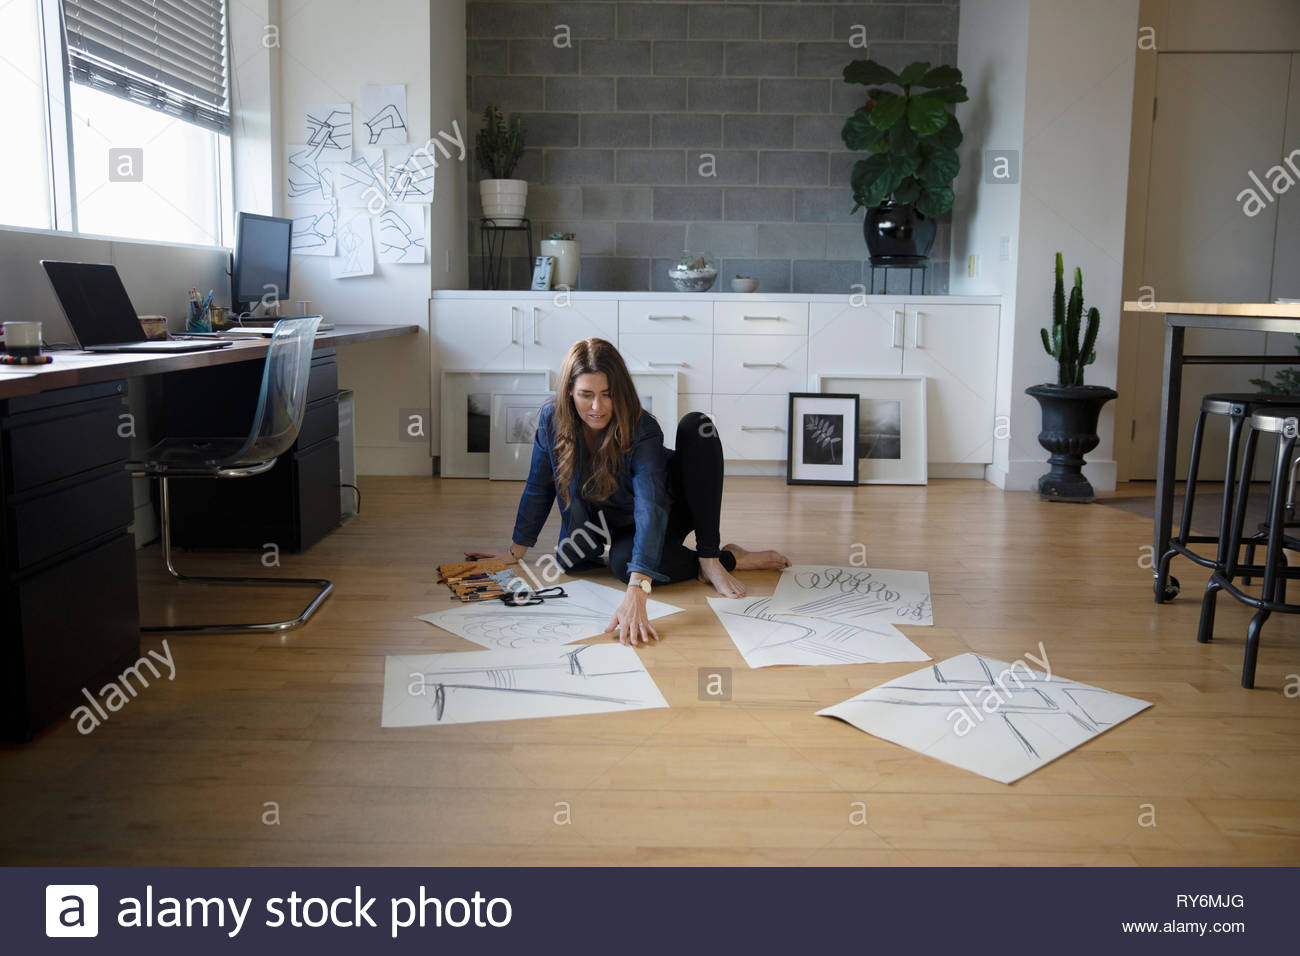 Female artist sketching on floor in studio Stock Photo